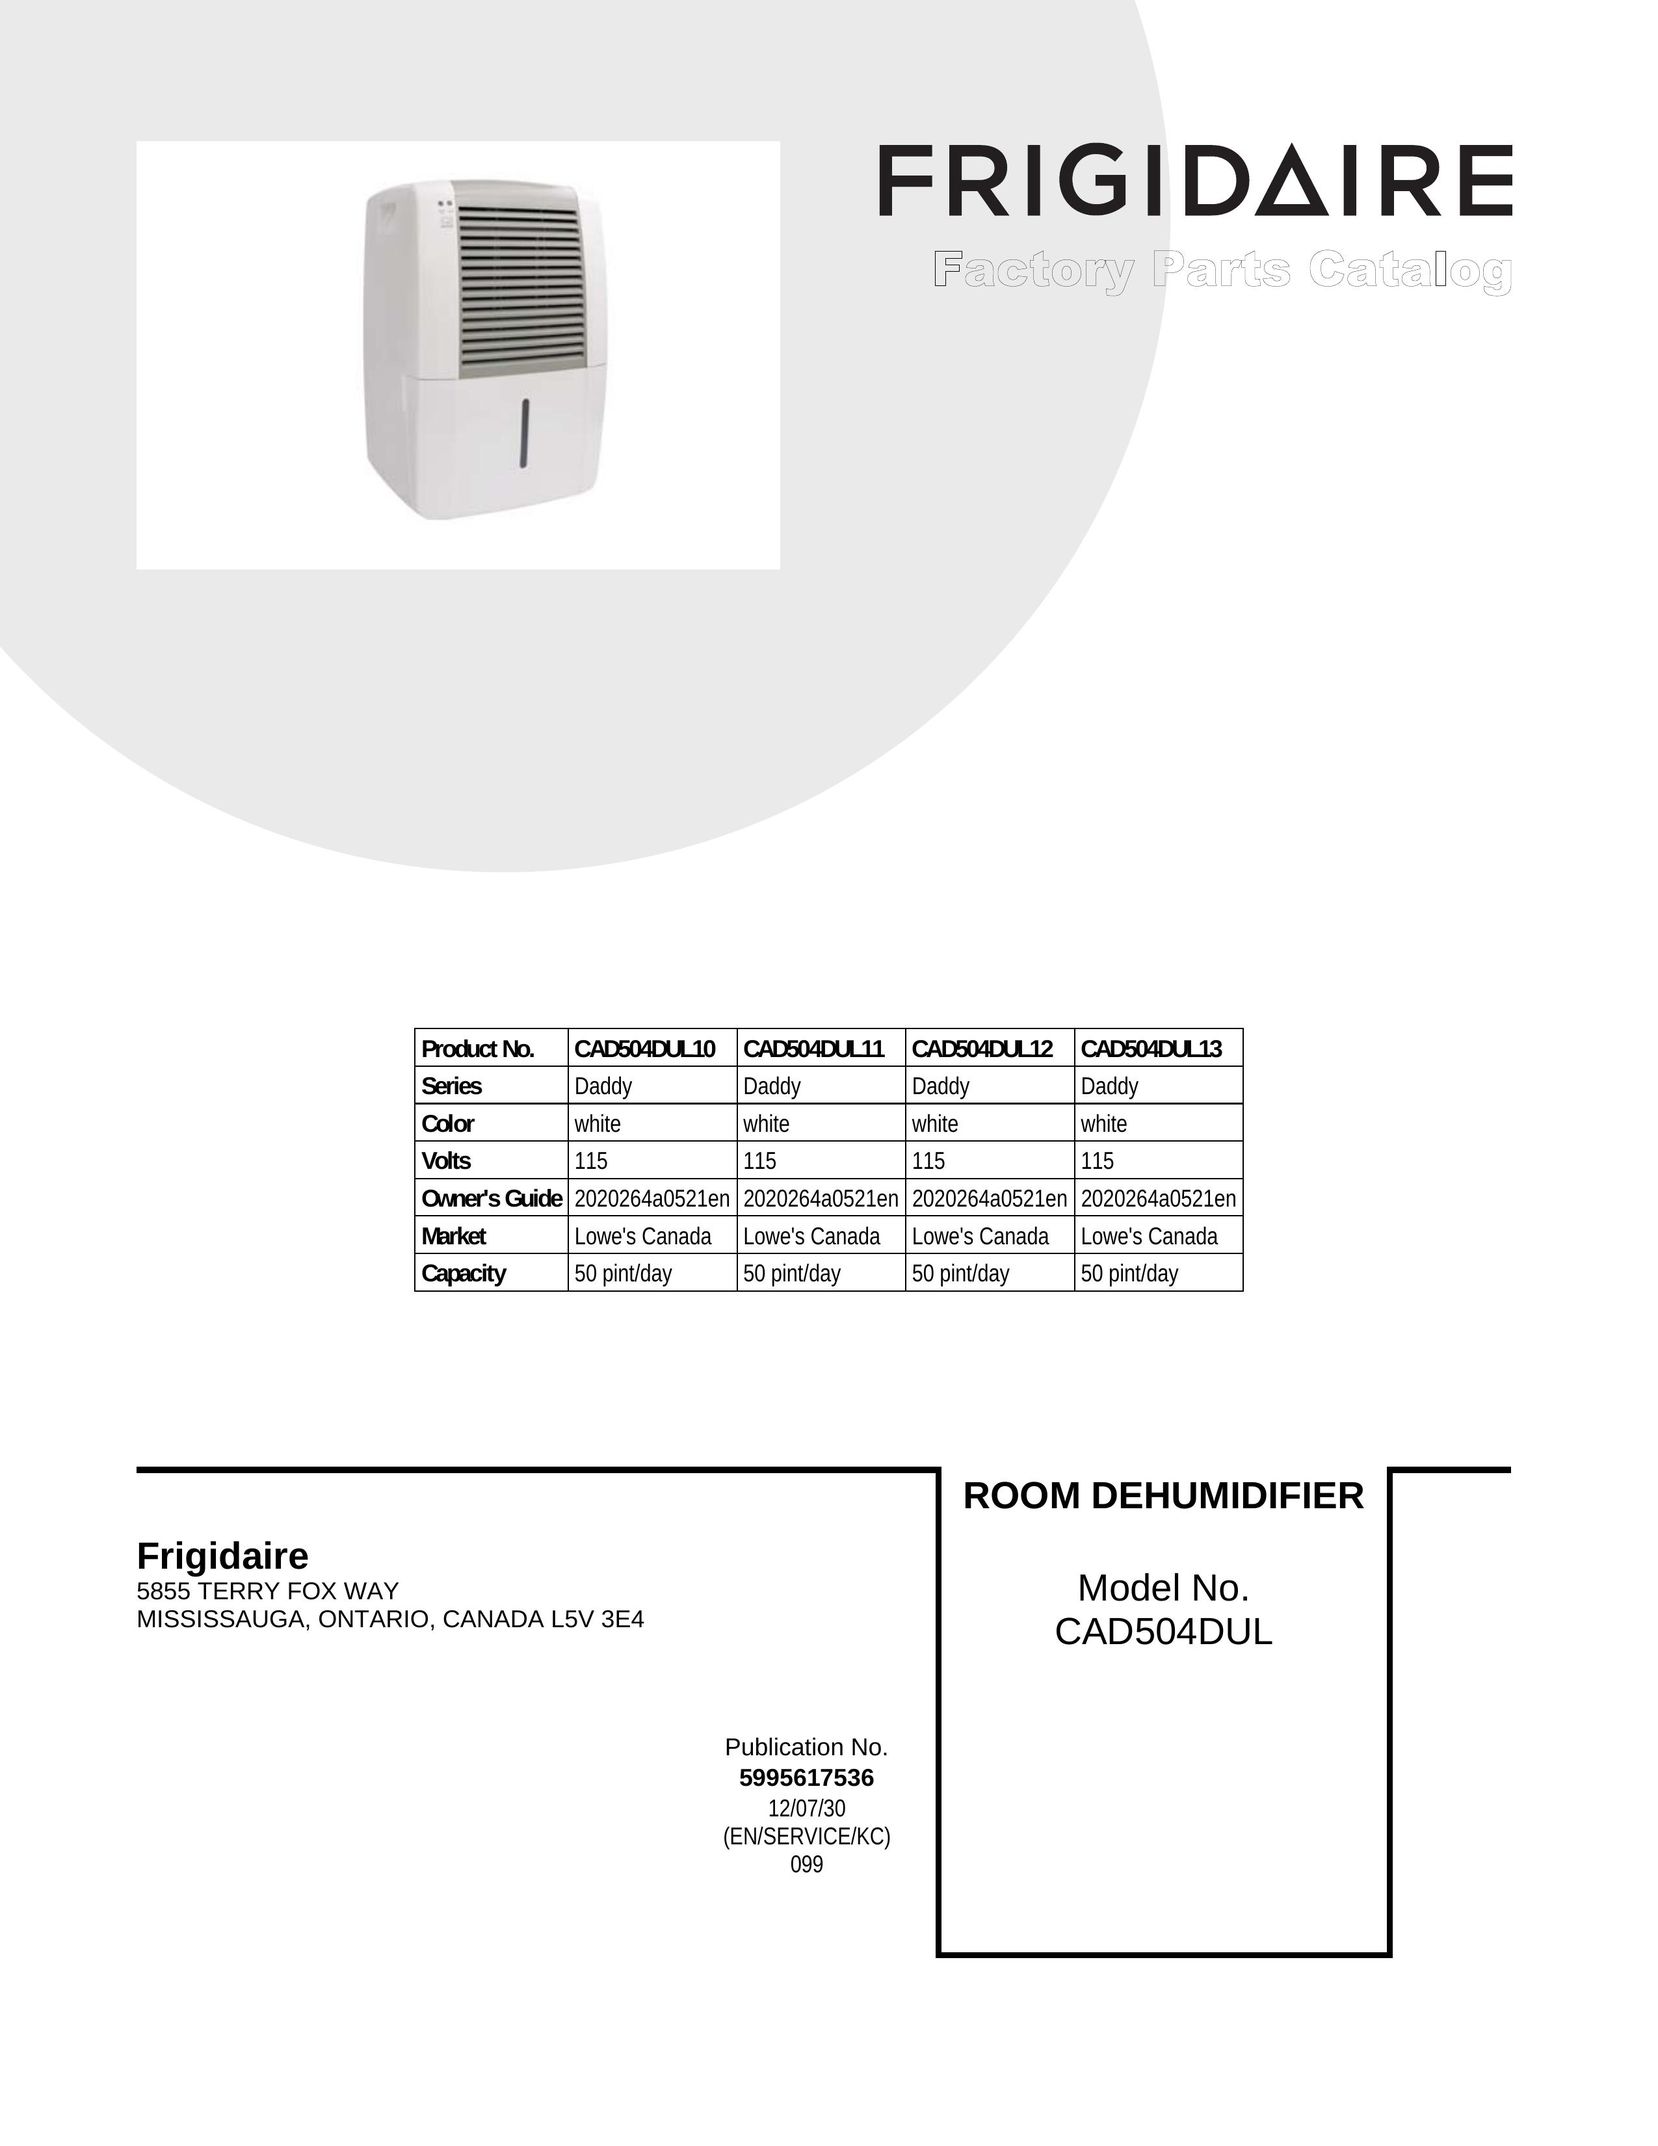 Frigidaire CAD504DUL11 Dehumidifier User Manual